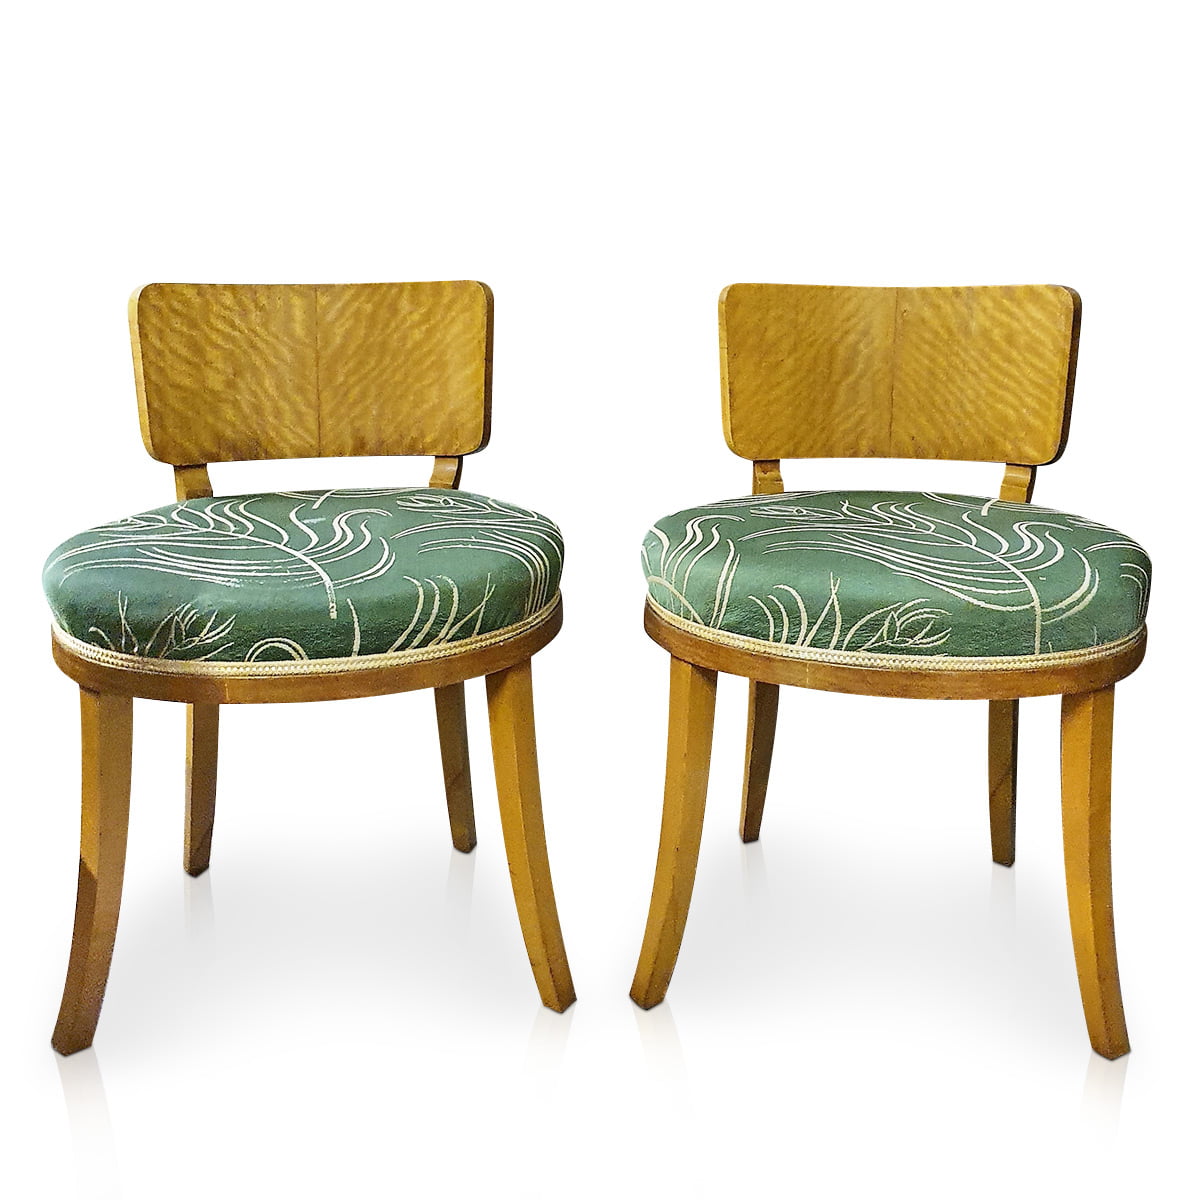 Art Deco Pair of Stools, oval seats with low backs in satin birch veneers